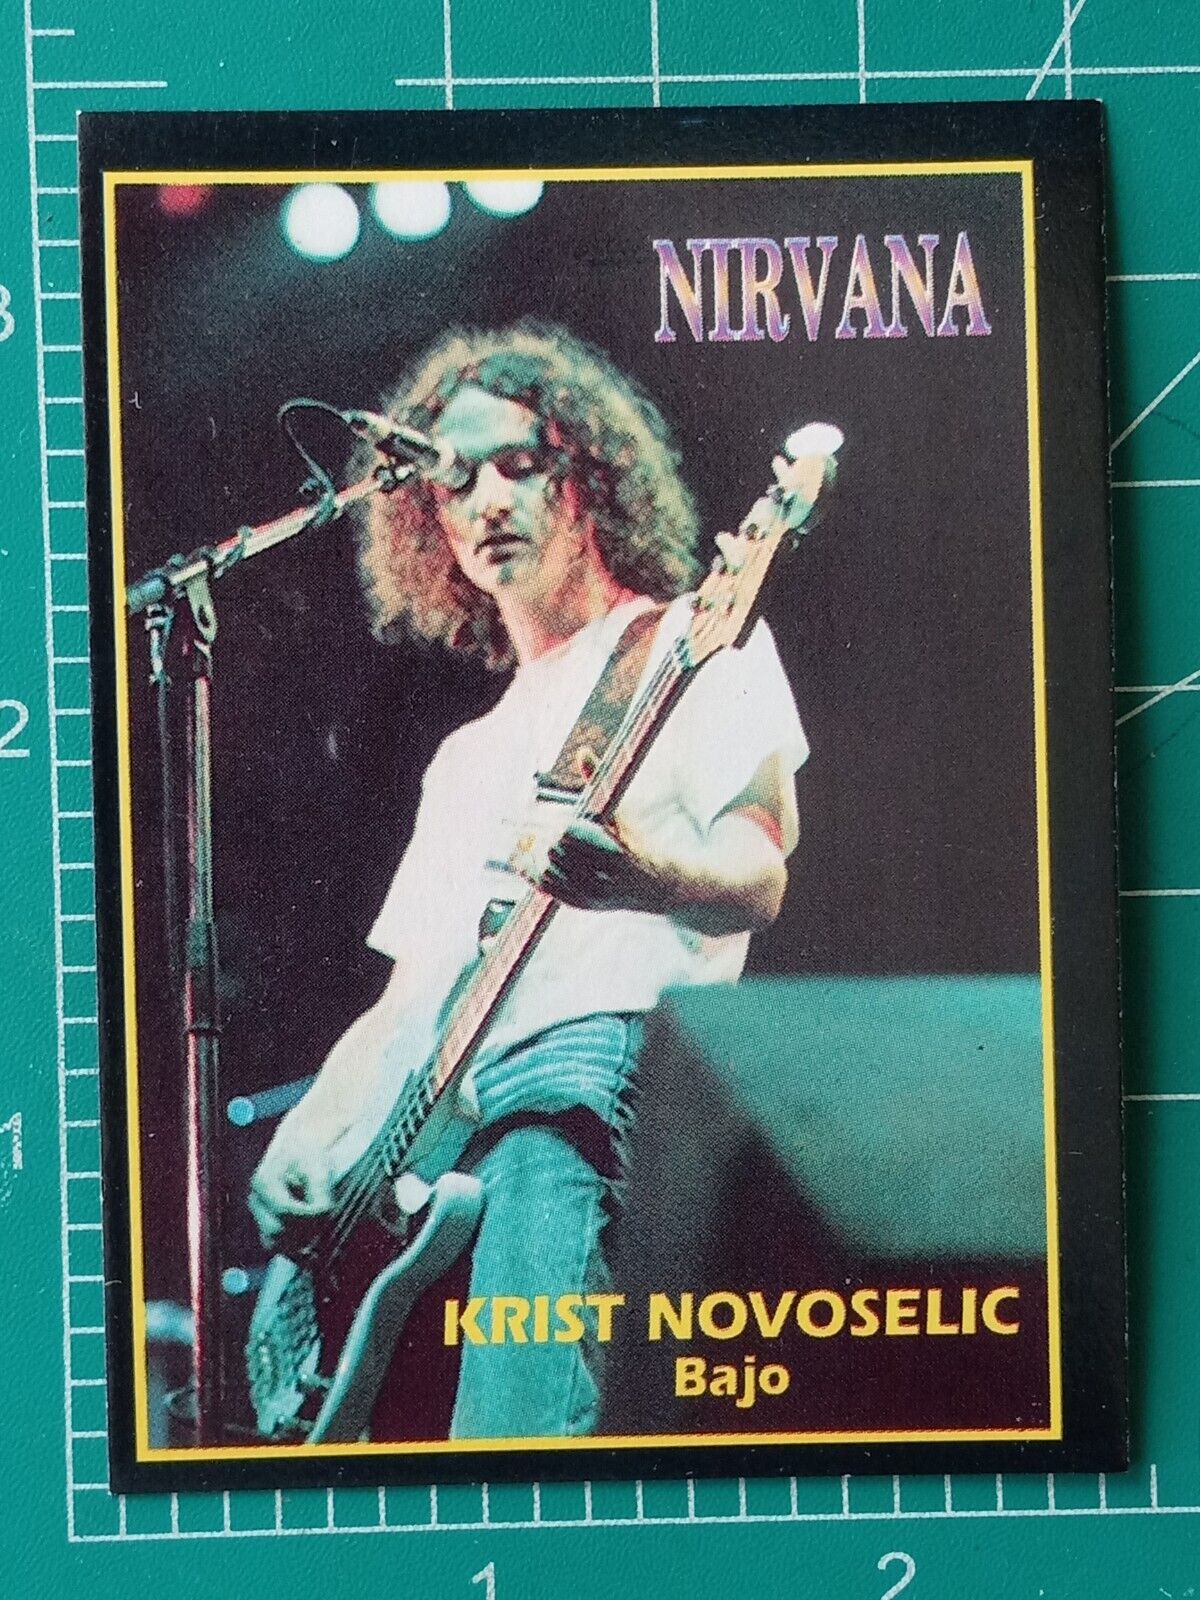 1994 Argentina Rock ULTRA FIGUS Music Card NIRVANA KRIST NOVOSELIC ERROR